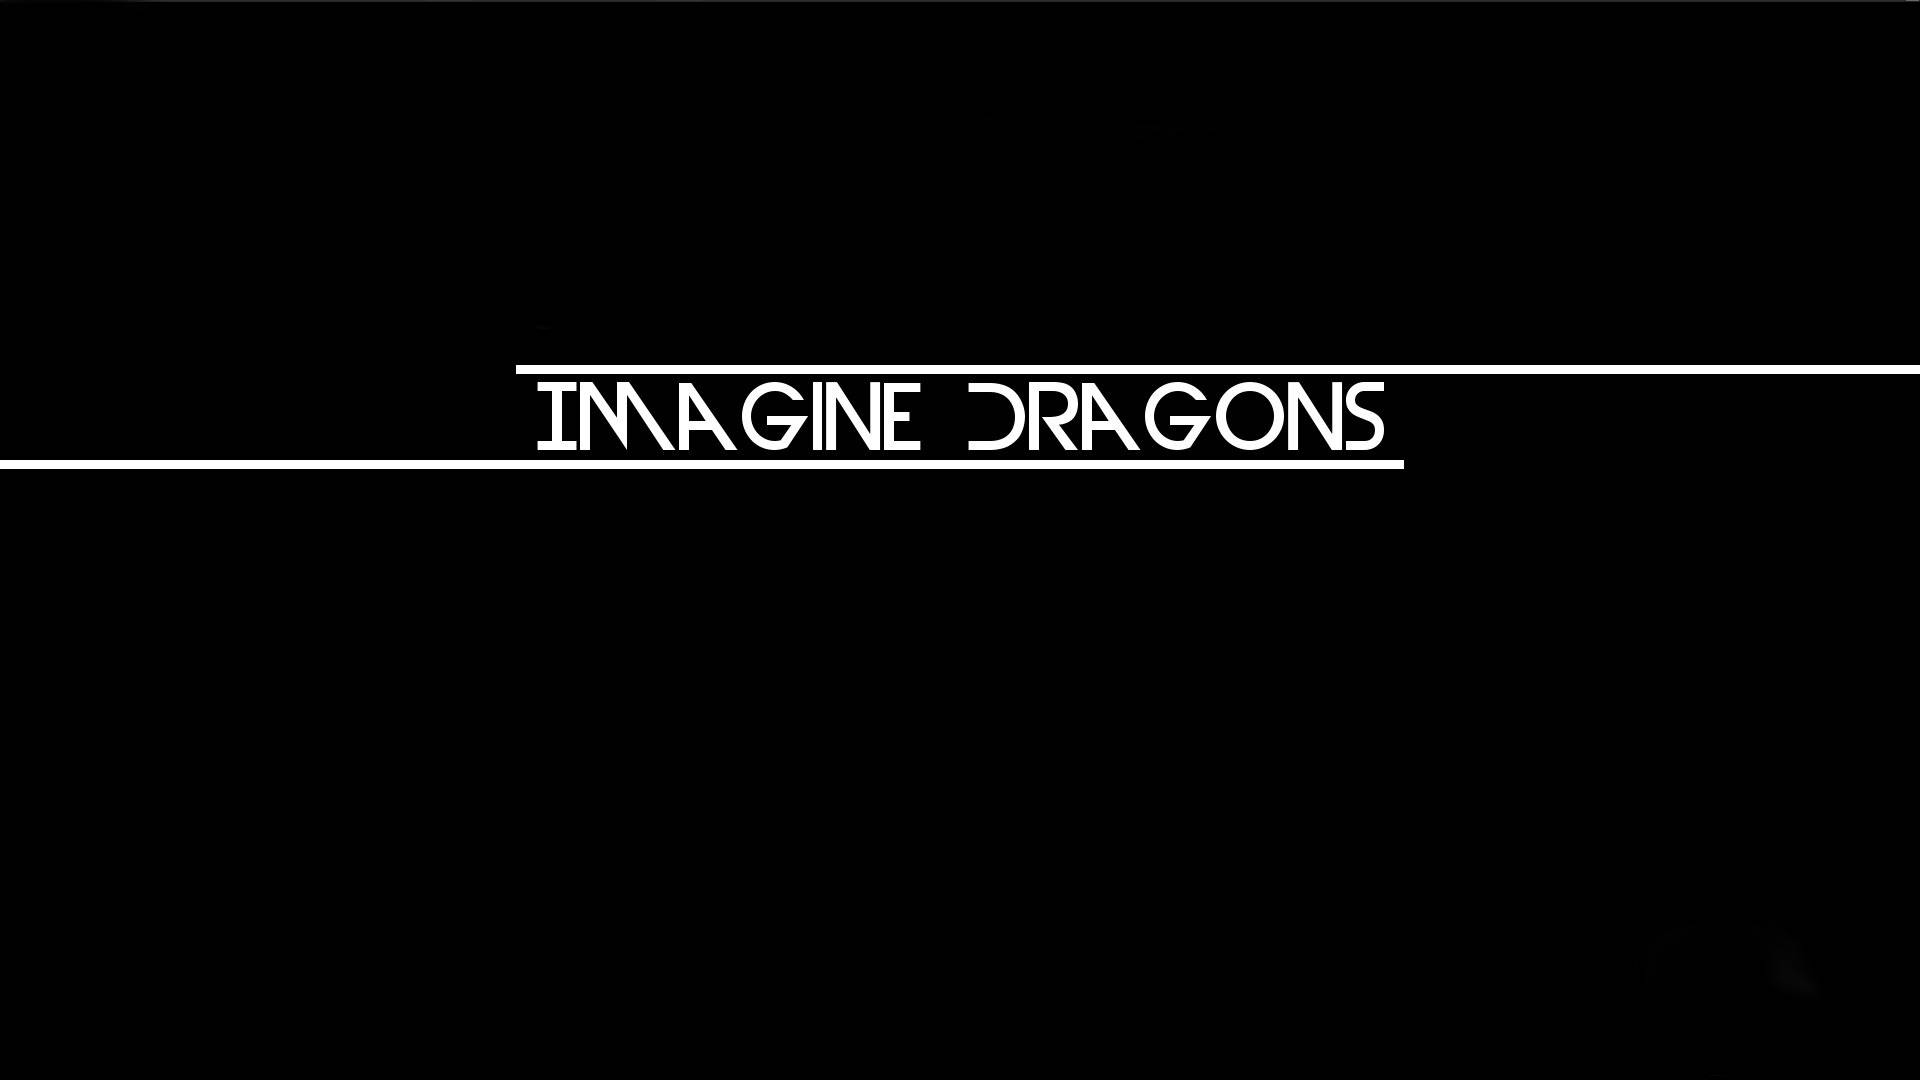 100+] Imagine Dragons Wallpapers | Wallpapers.com